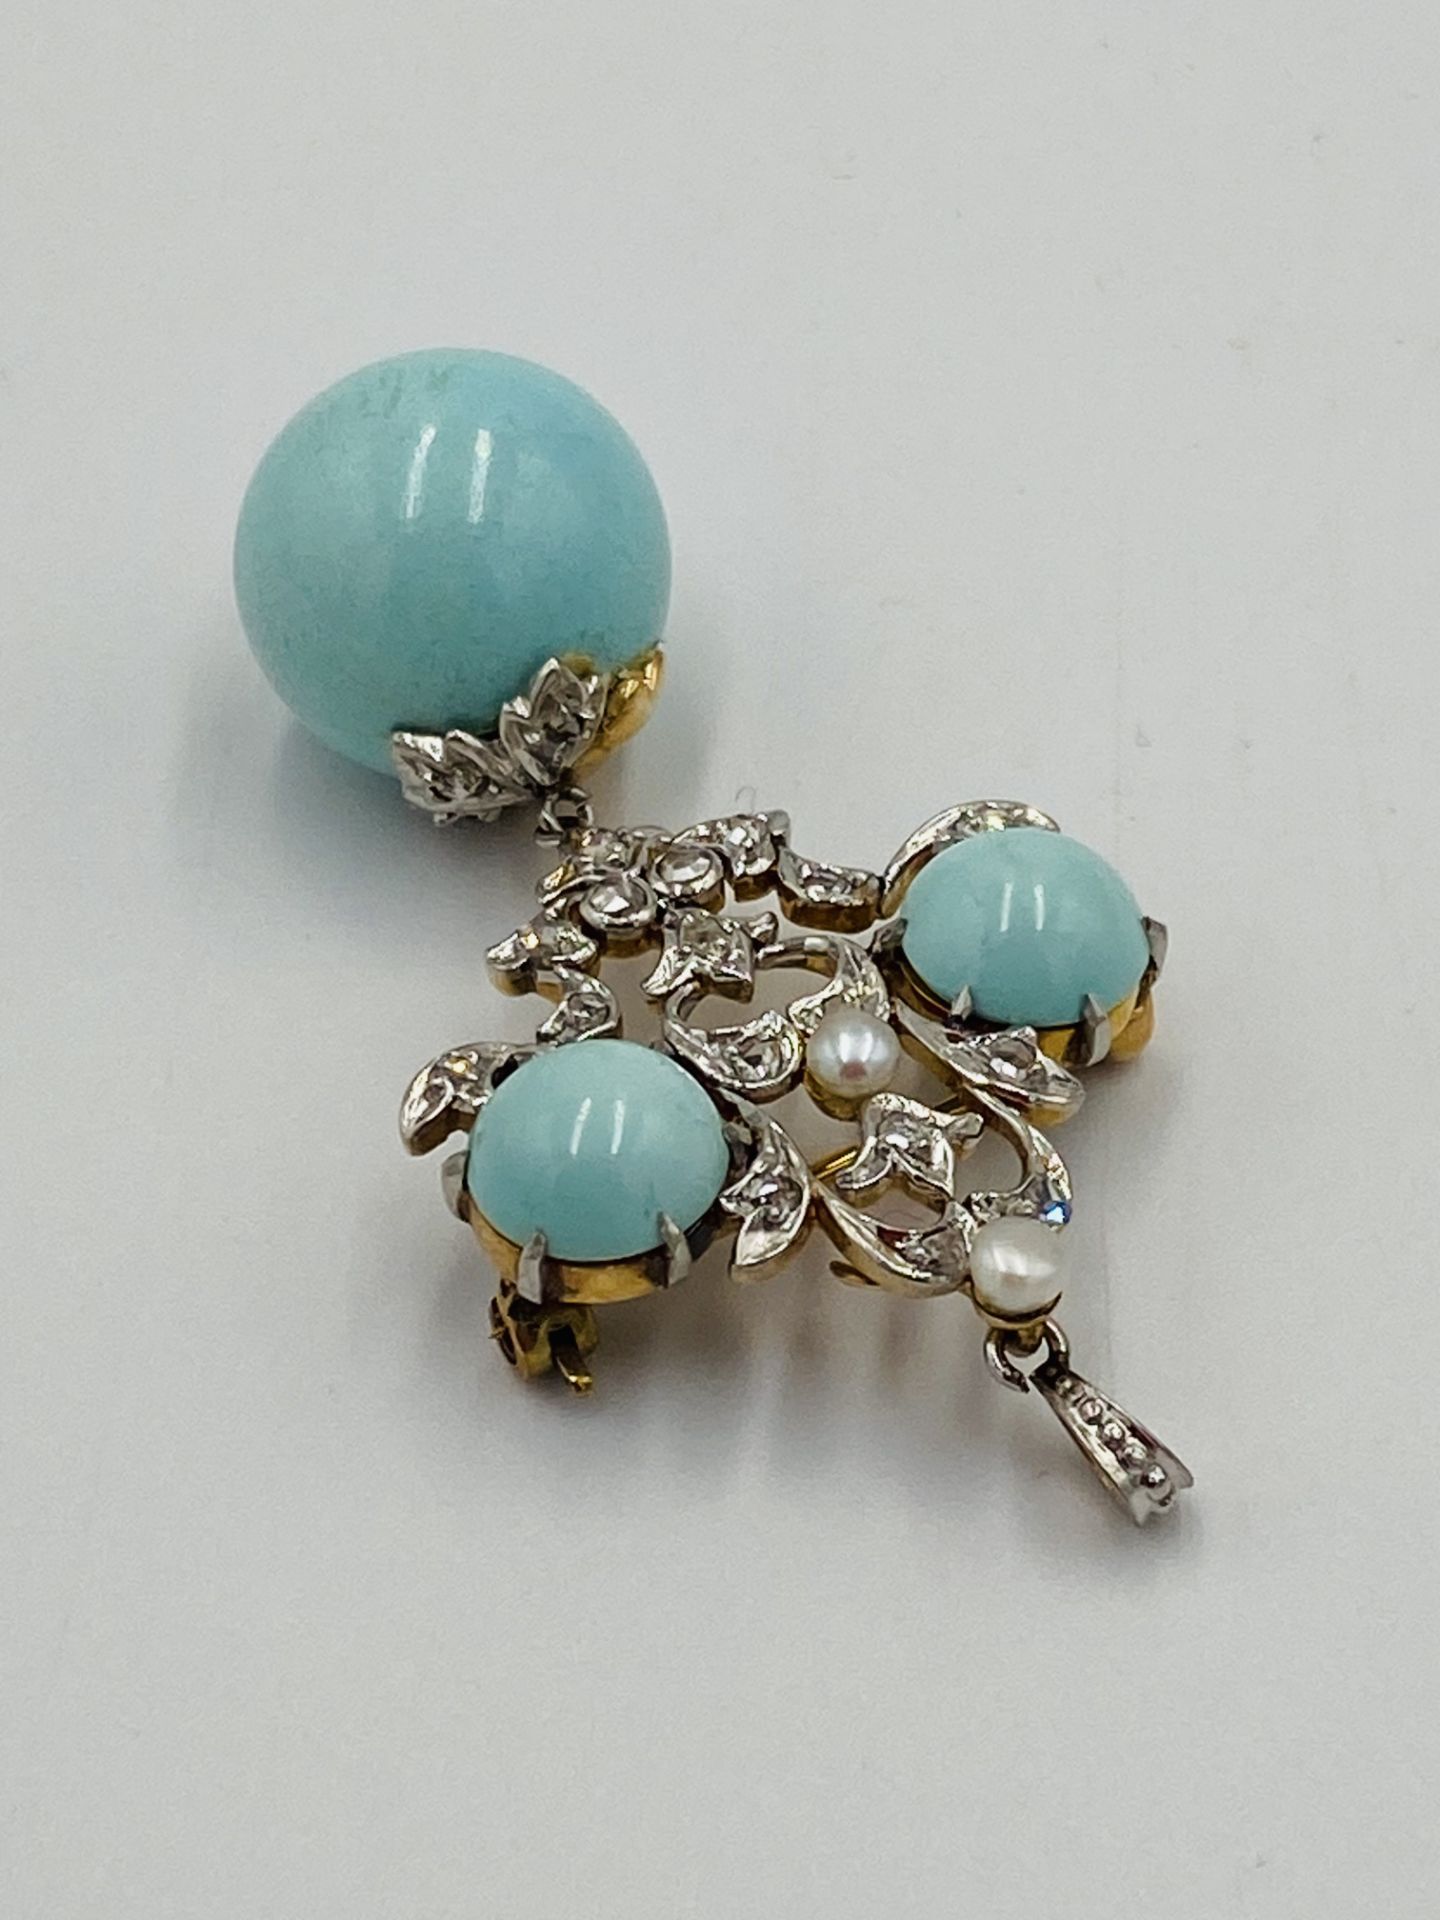 Turquoise and diamond brooch/pendant